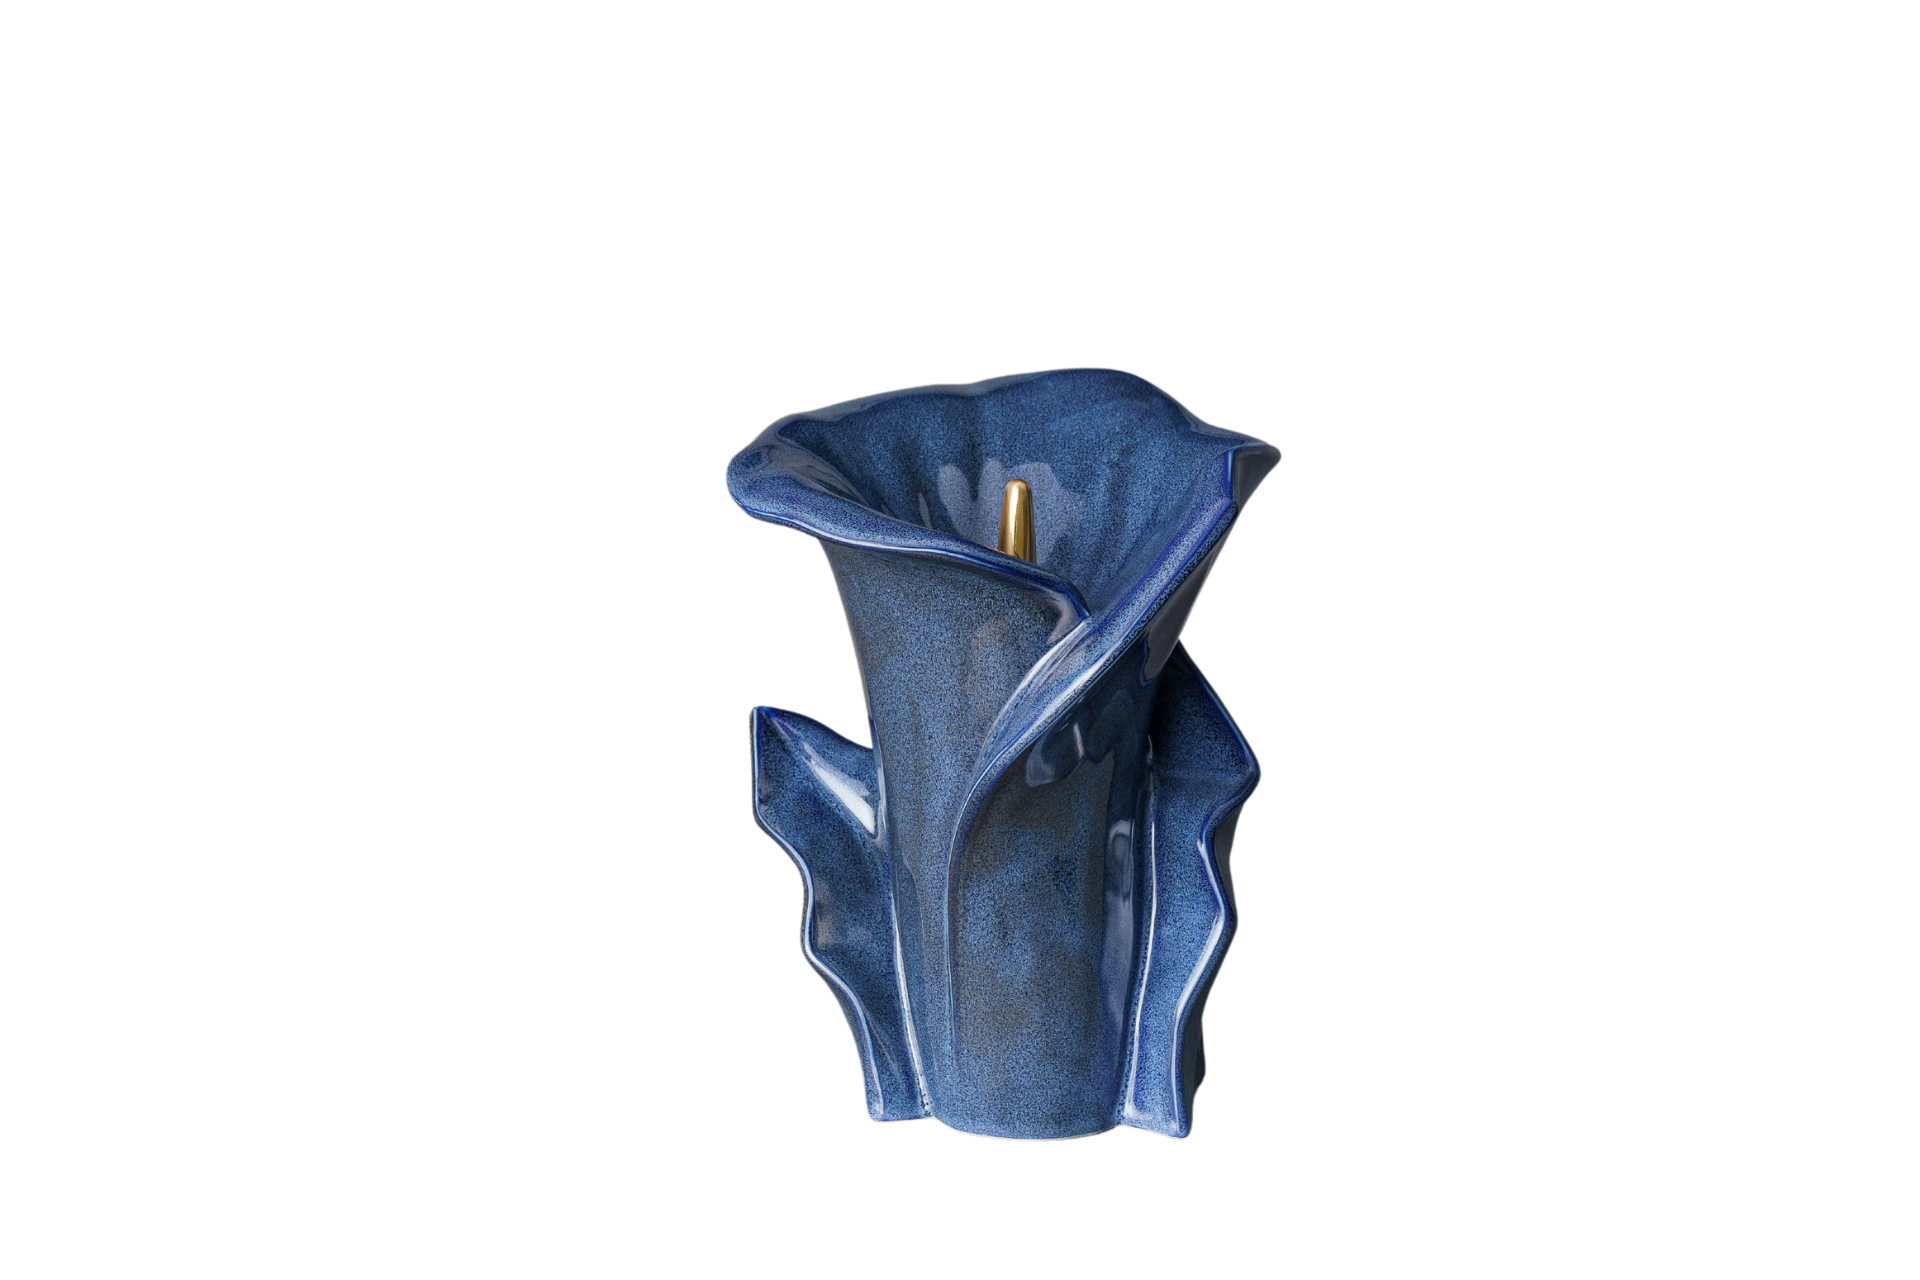 Calla ceramic urn